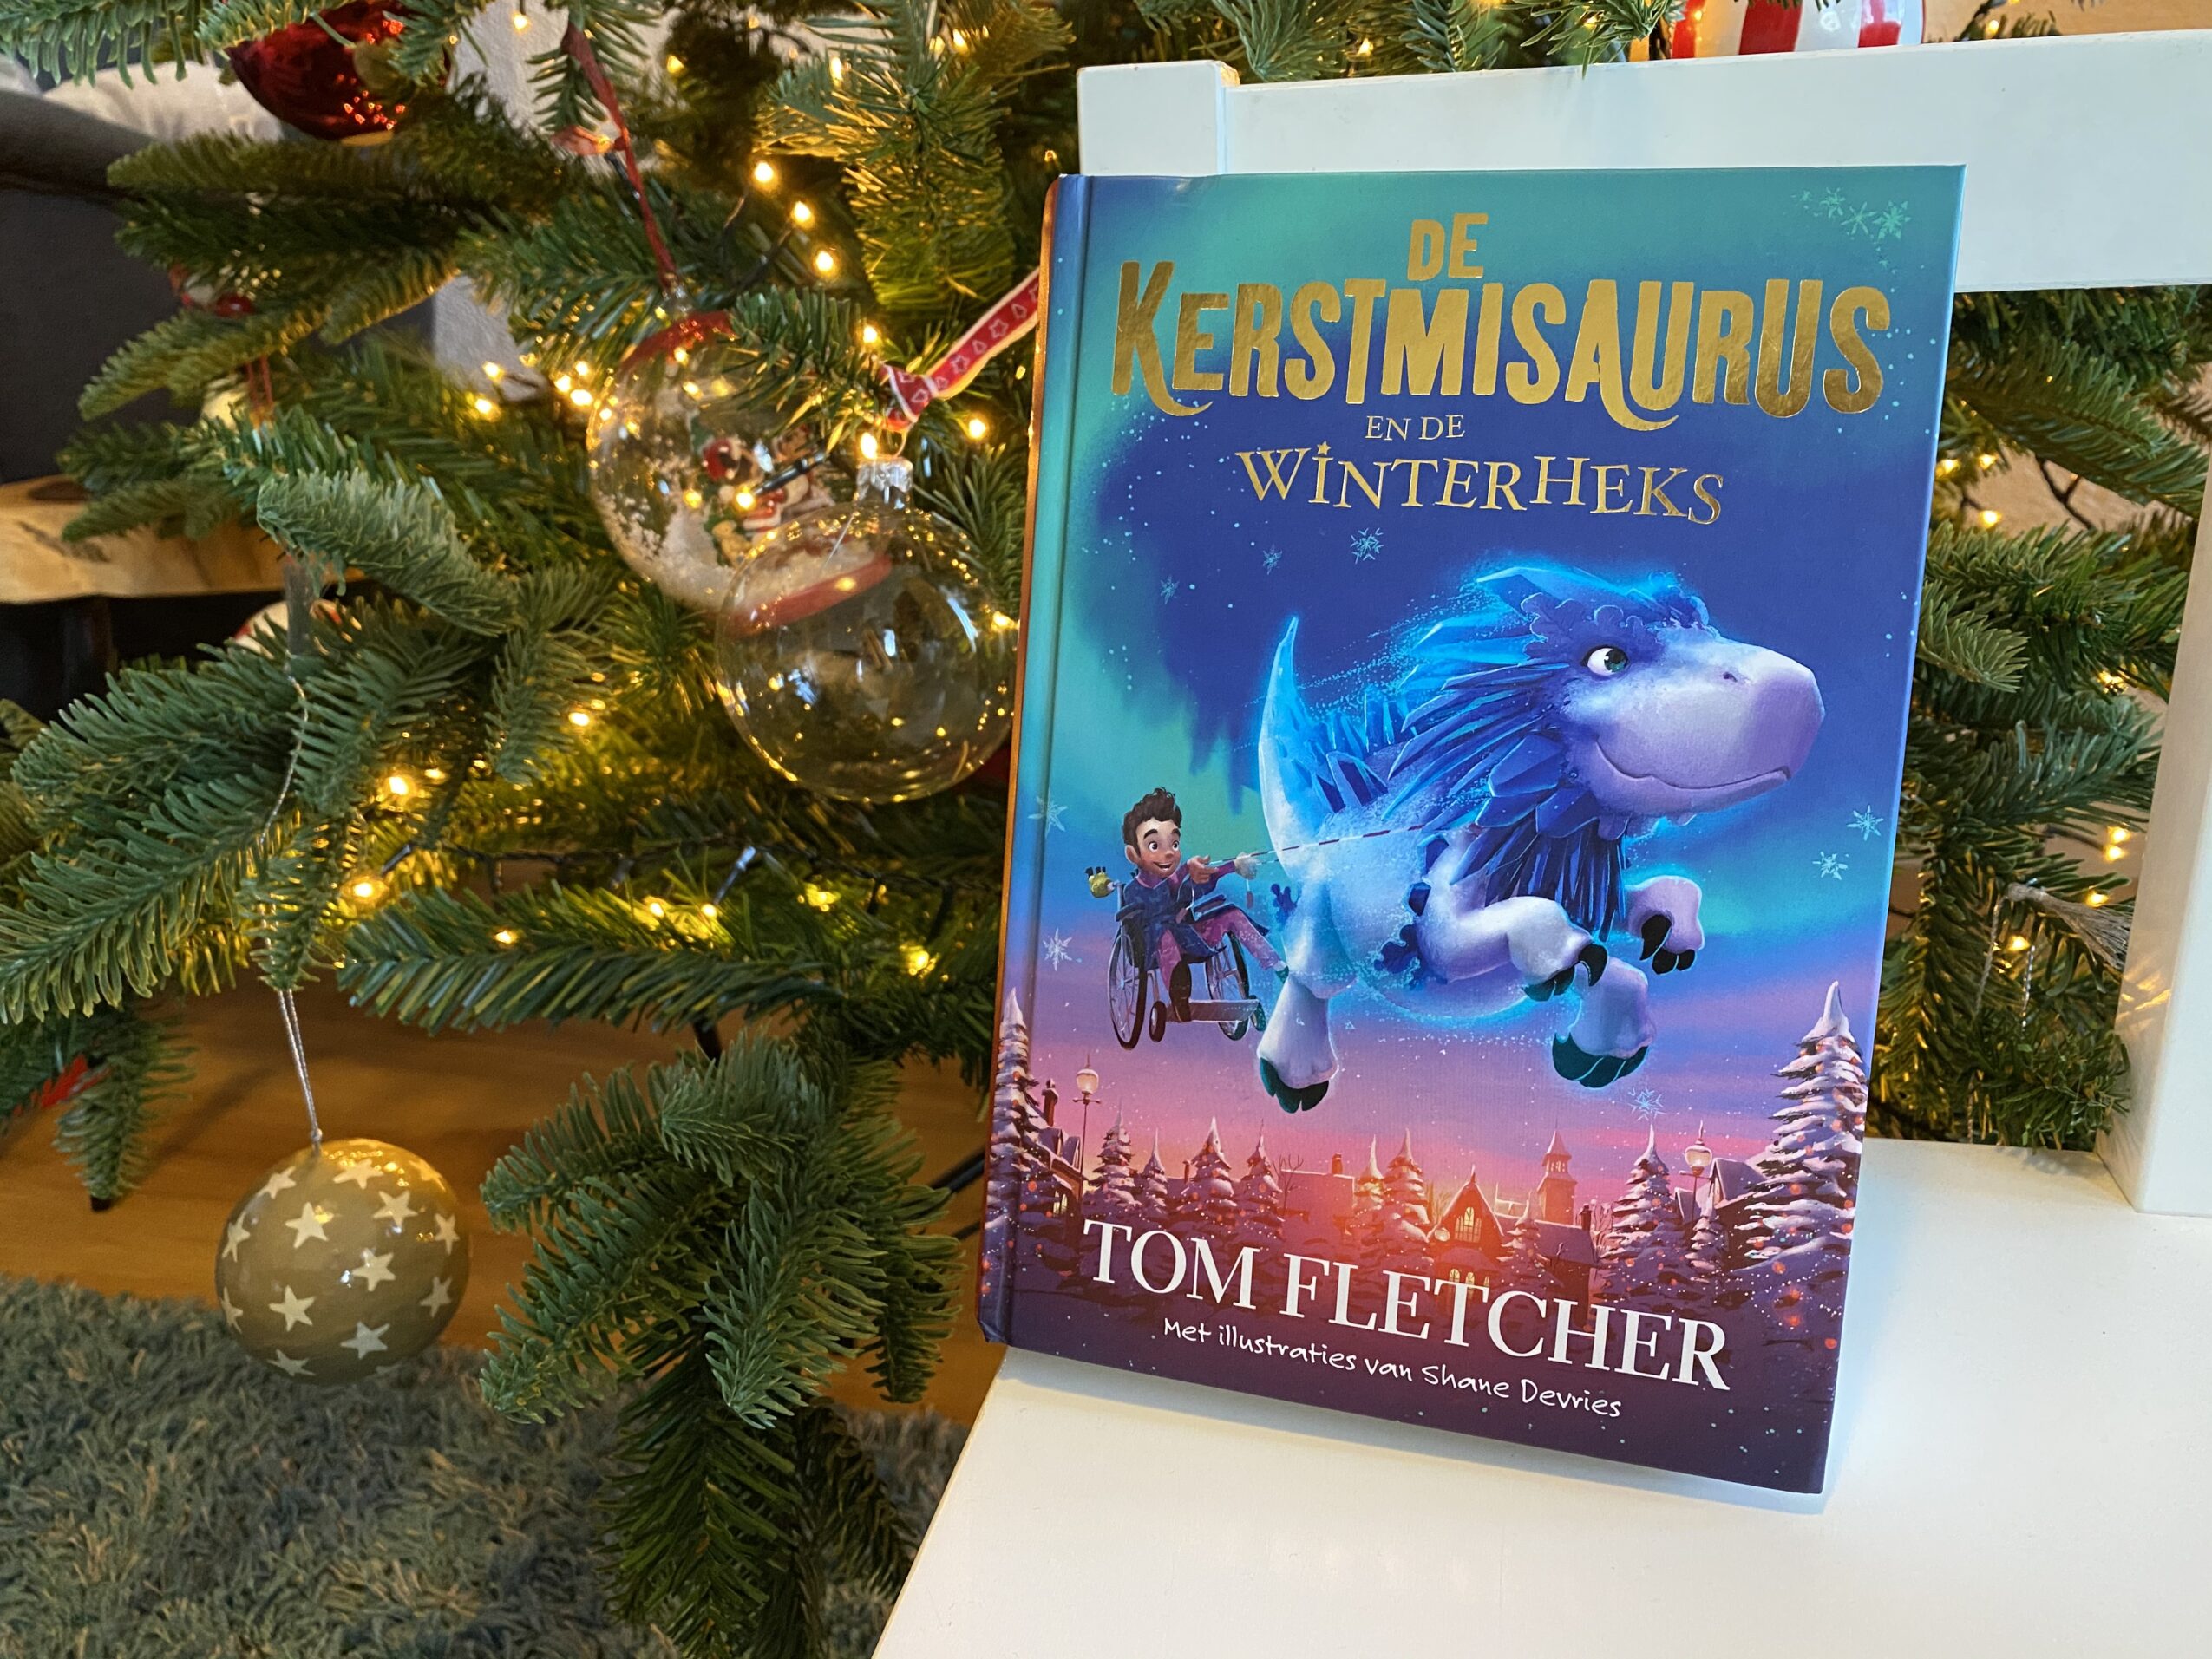 De Kerstmisaurus en de Winterheks